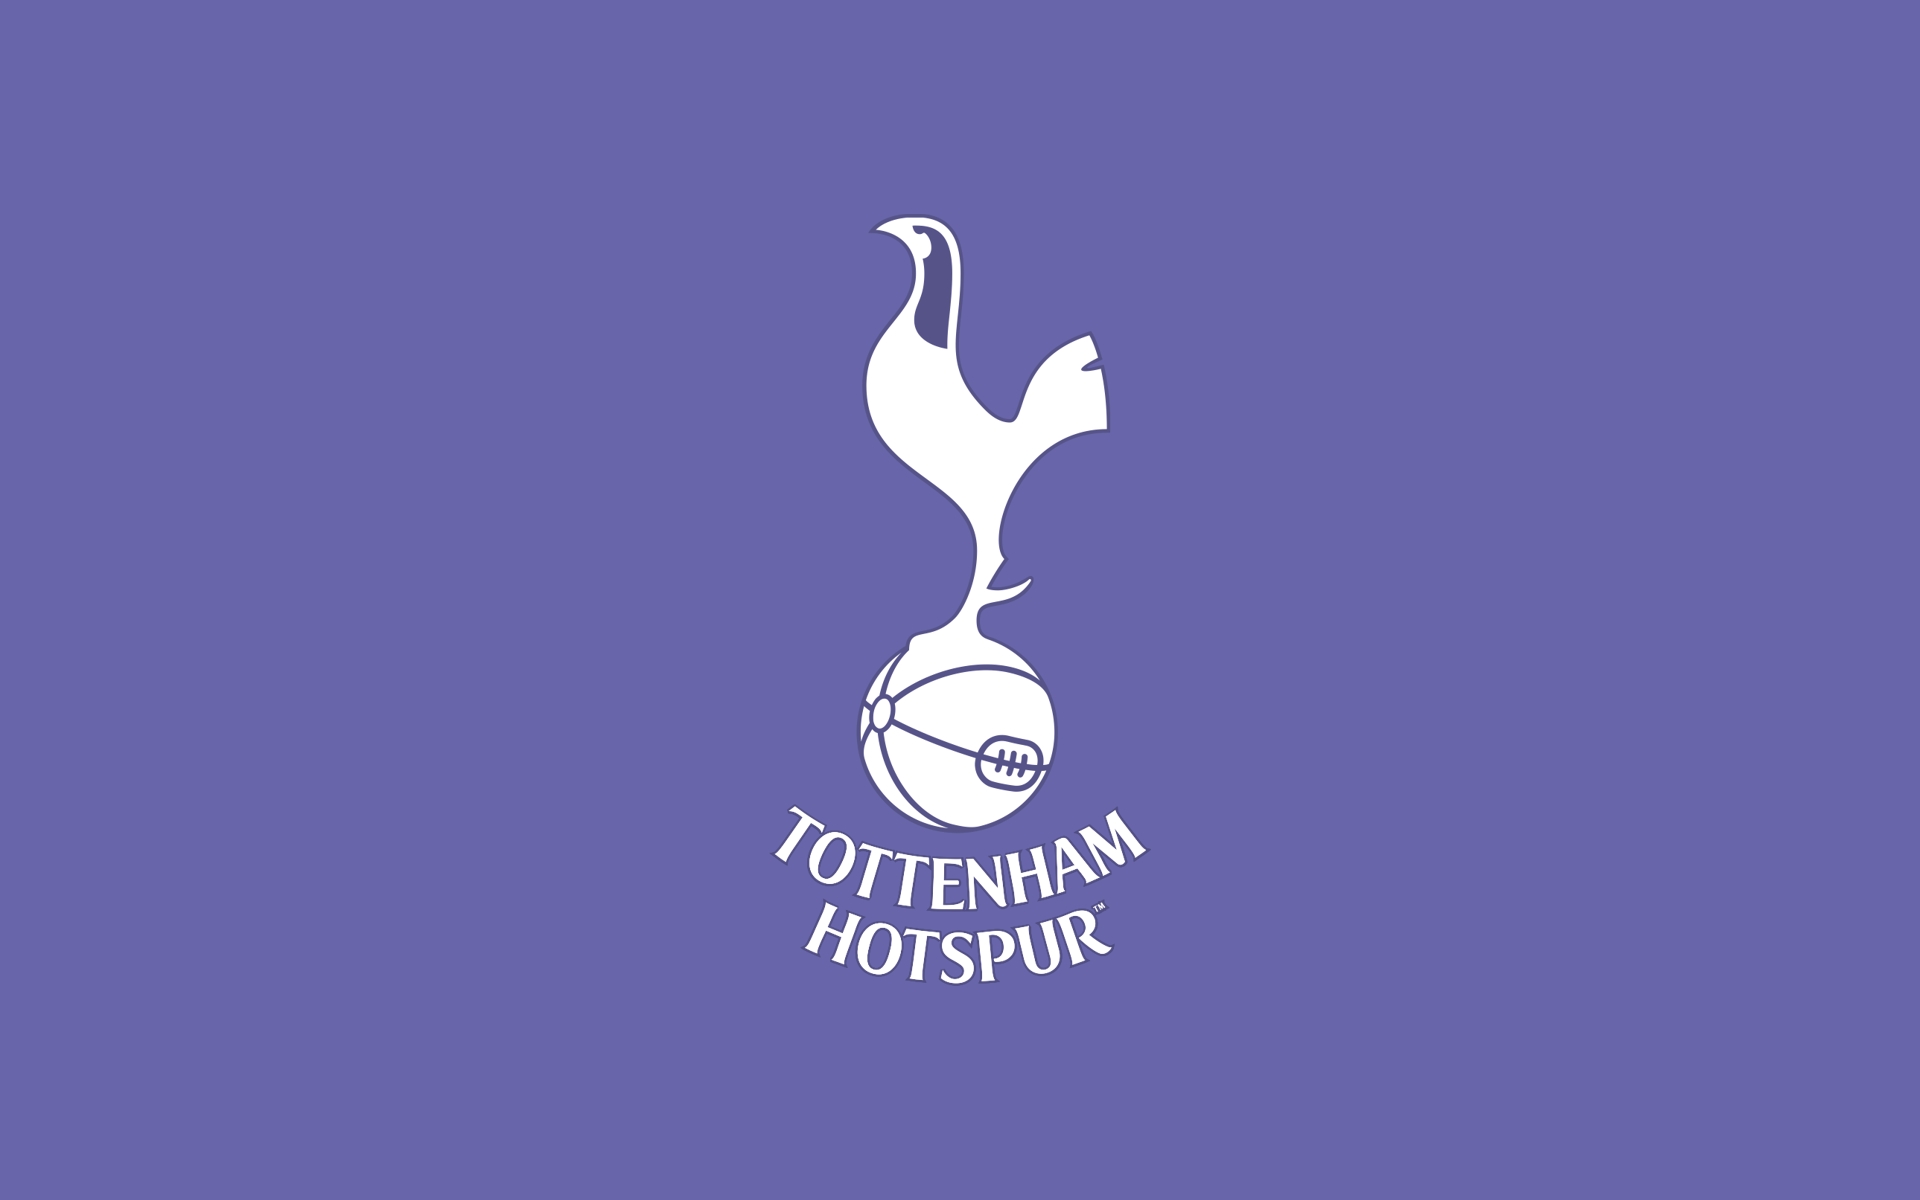 Tottenham Hotspurs Wallpaper Android Phone